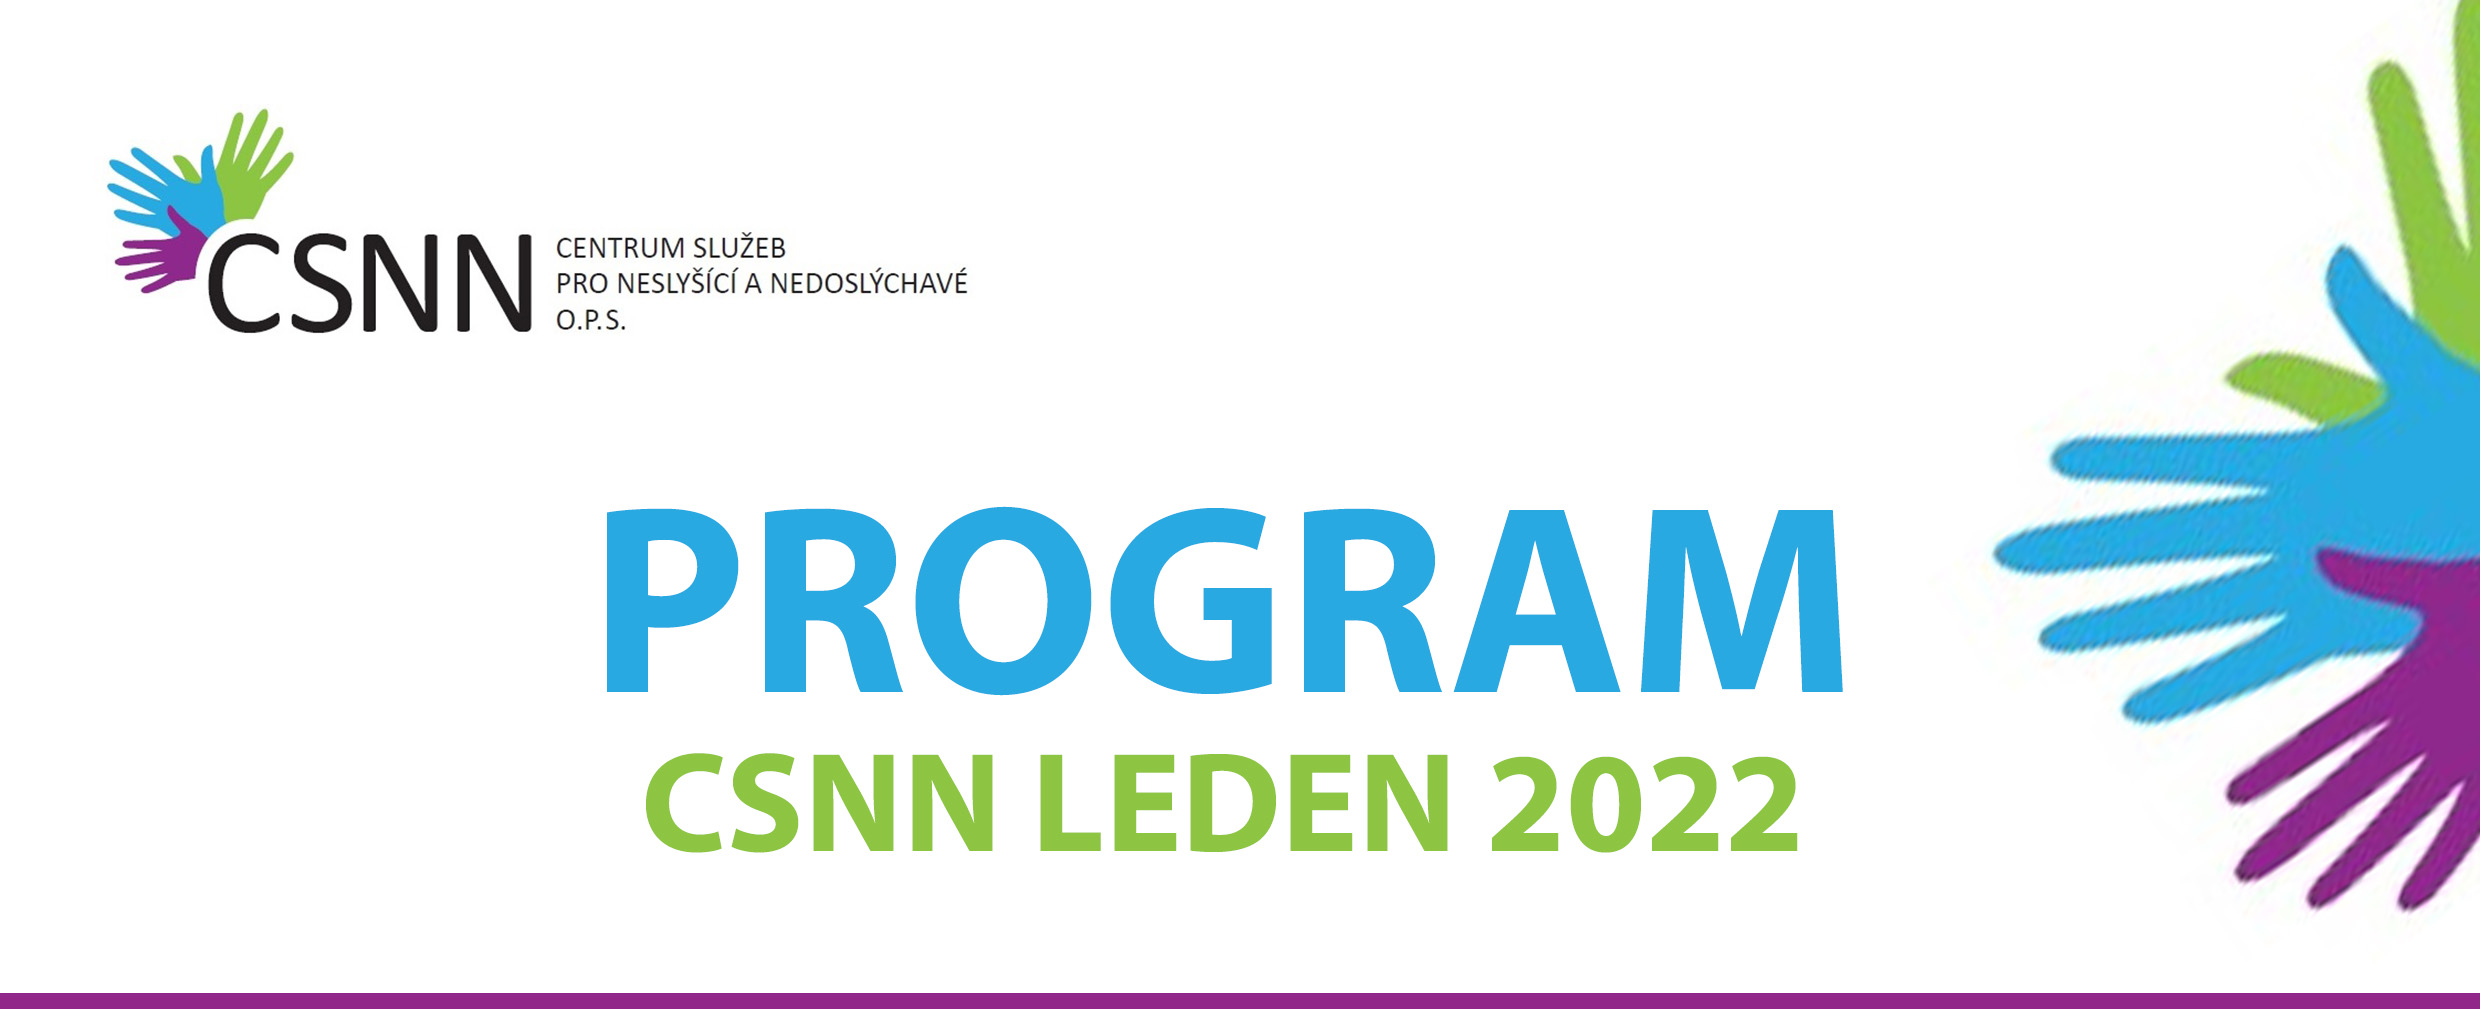 Program CSNN leden 2022